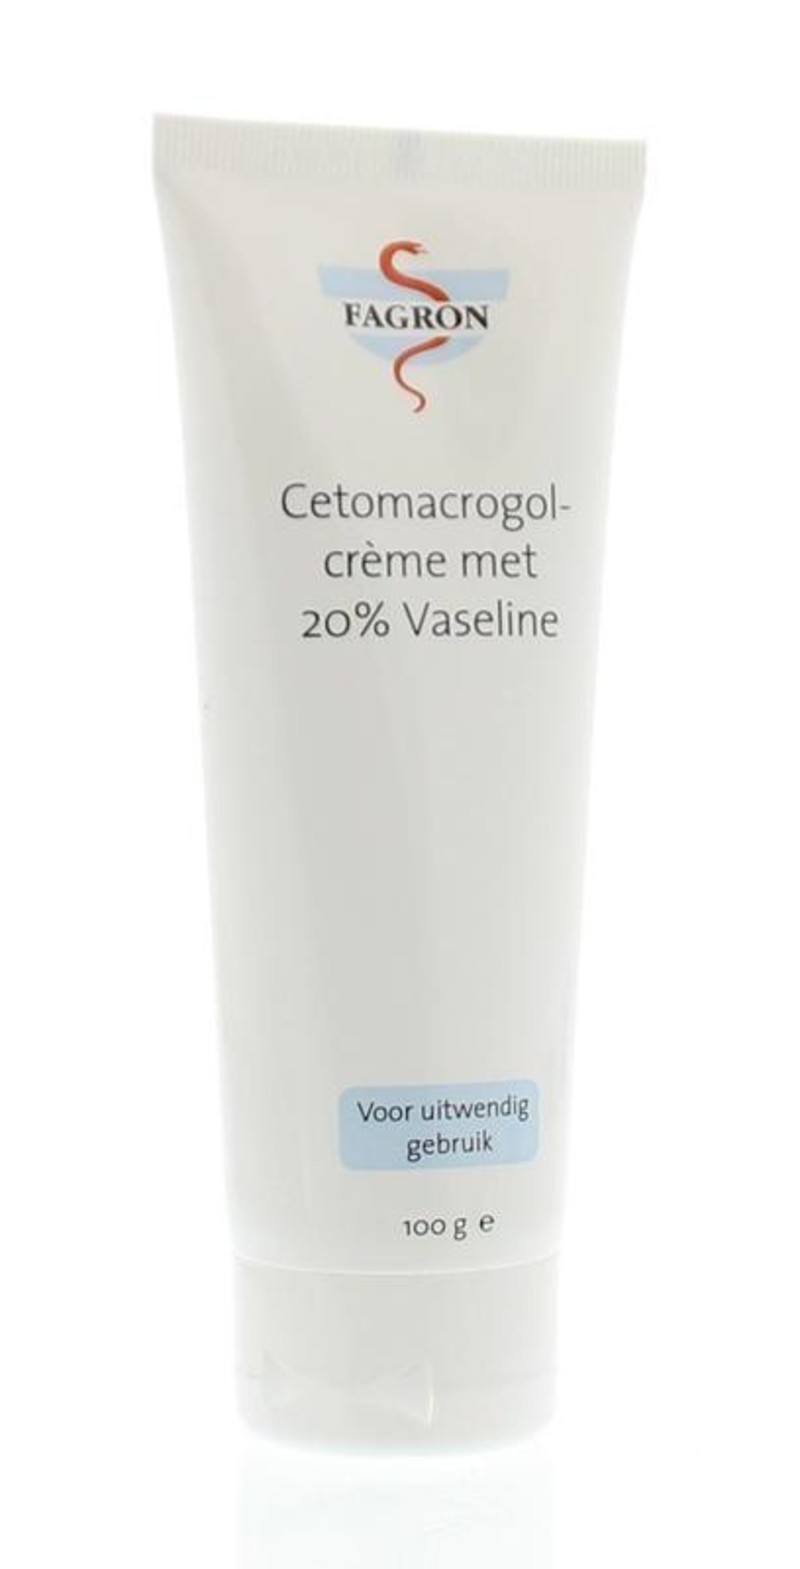 Cetomacrogol creme 20% vaseline | Fagron - We Eves: honest cosmetic reviews.